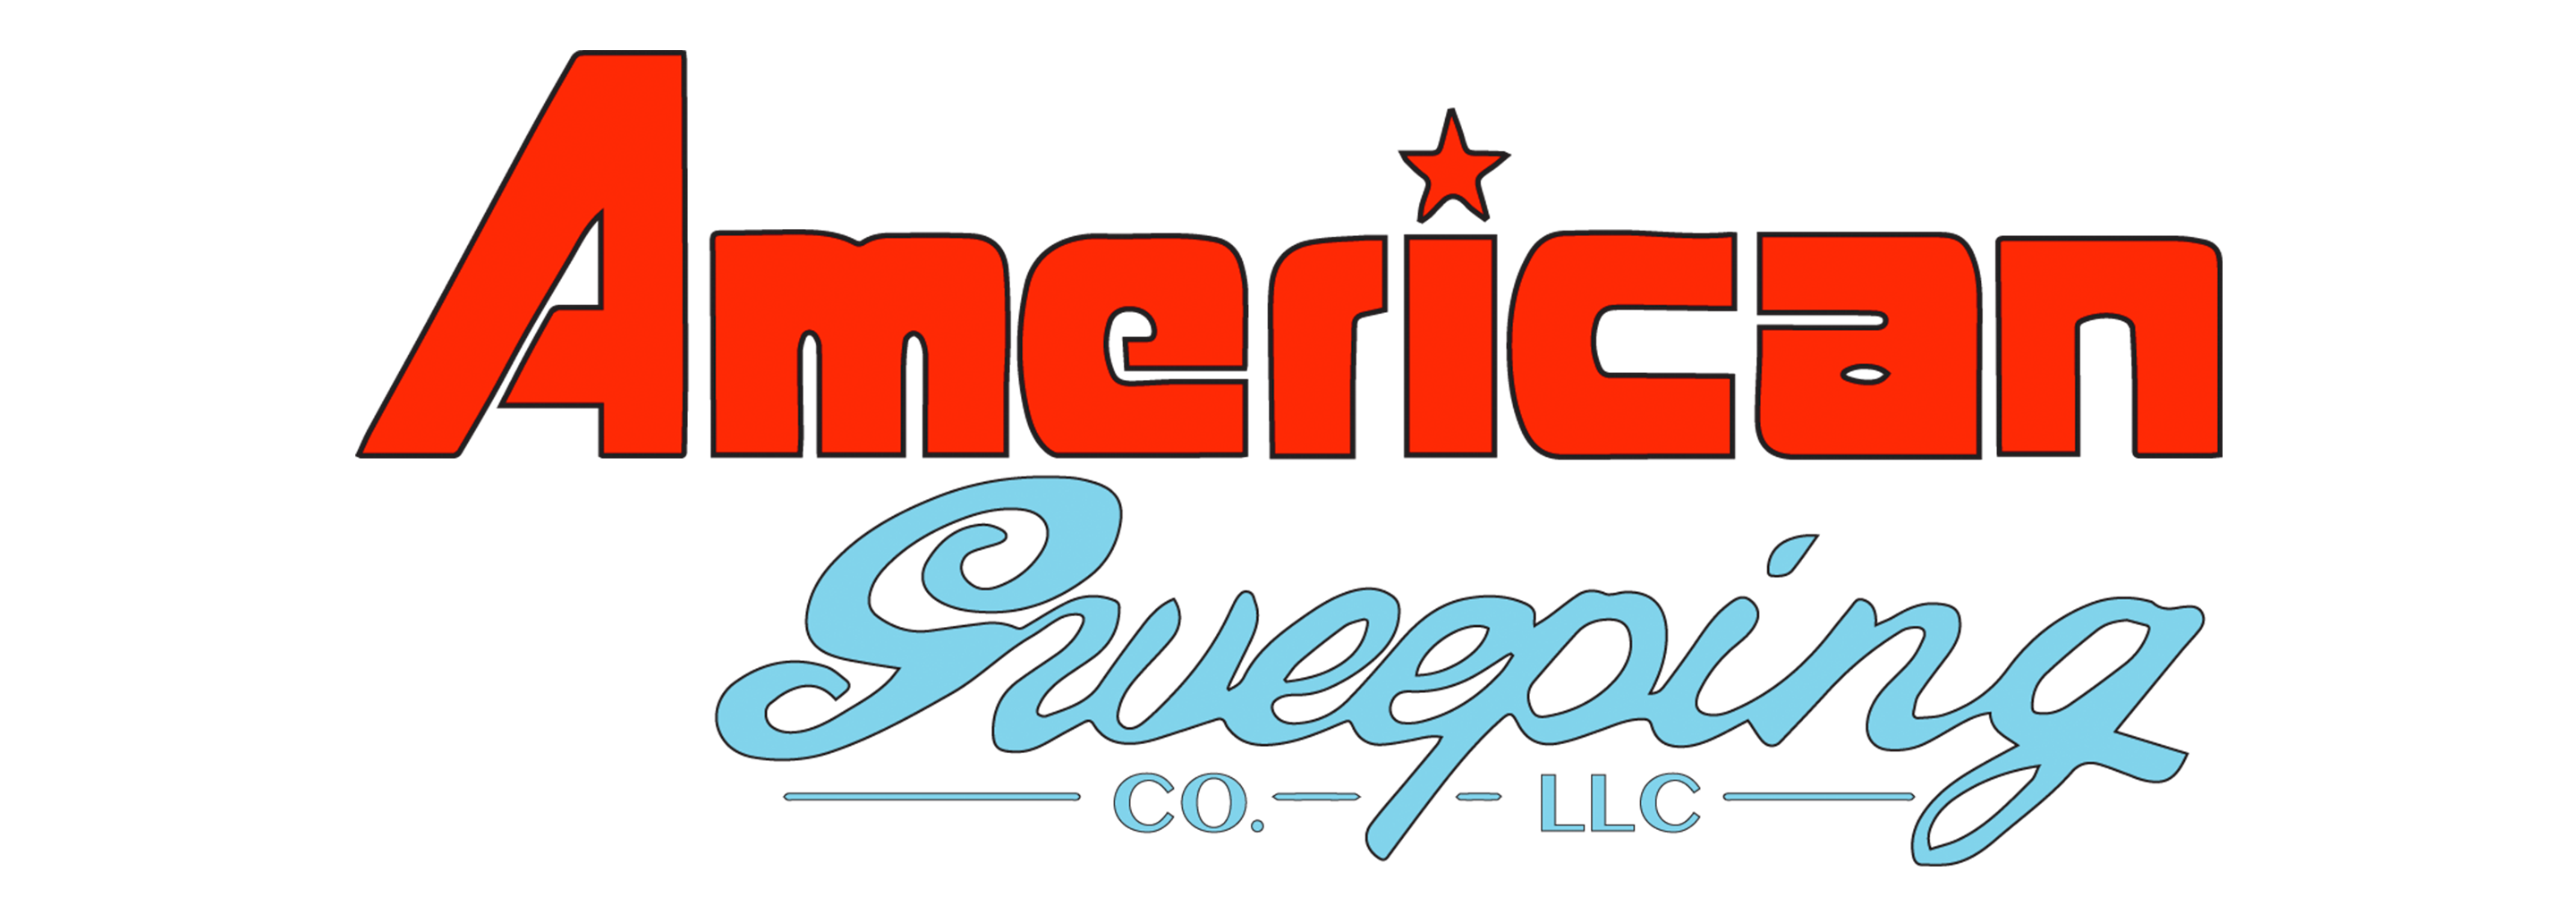 American Sweeping logo